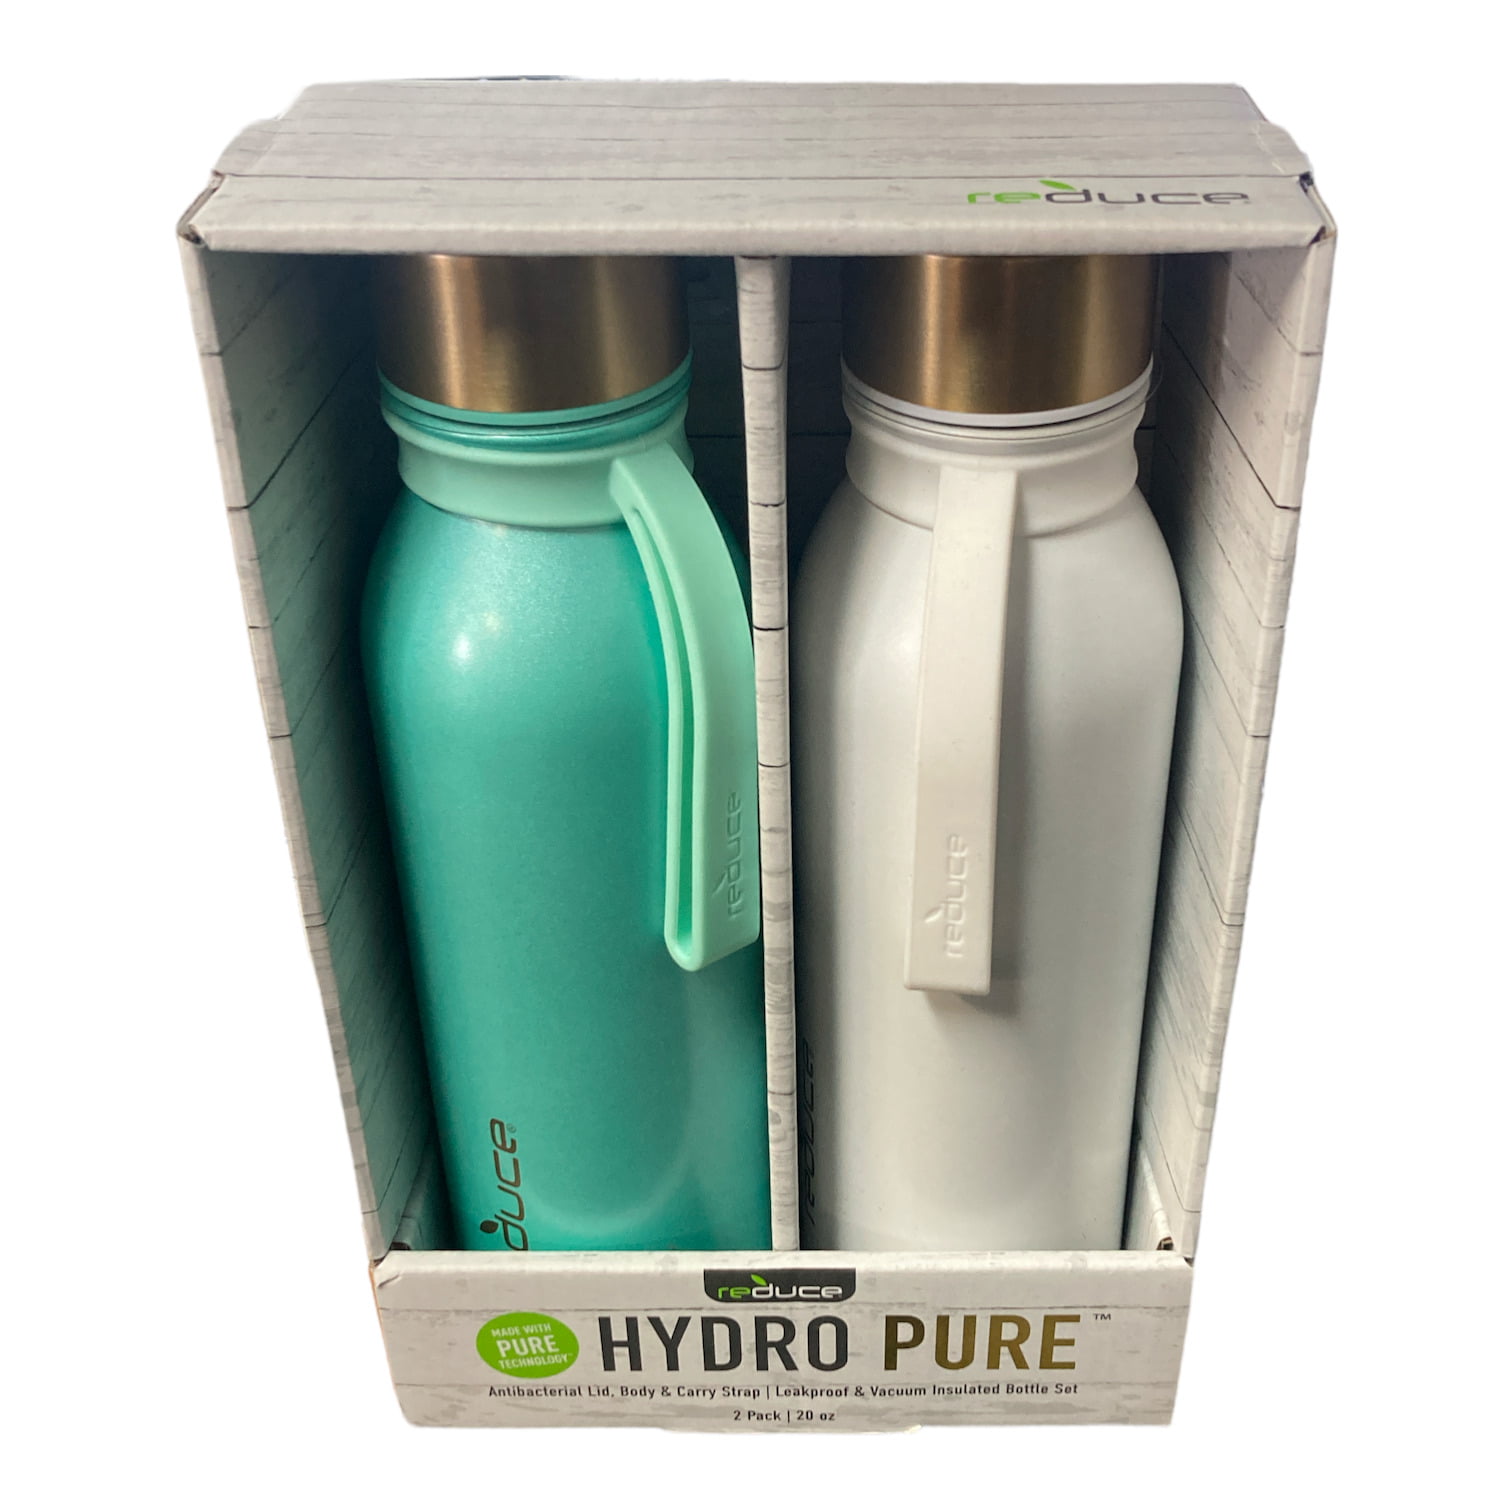 Hydros Water Filter Bottle - 20oz, Green